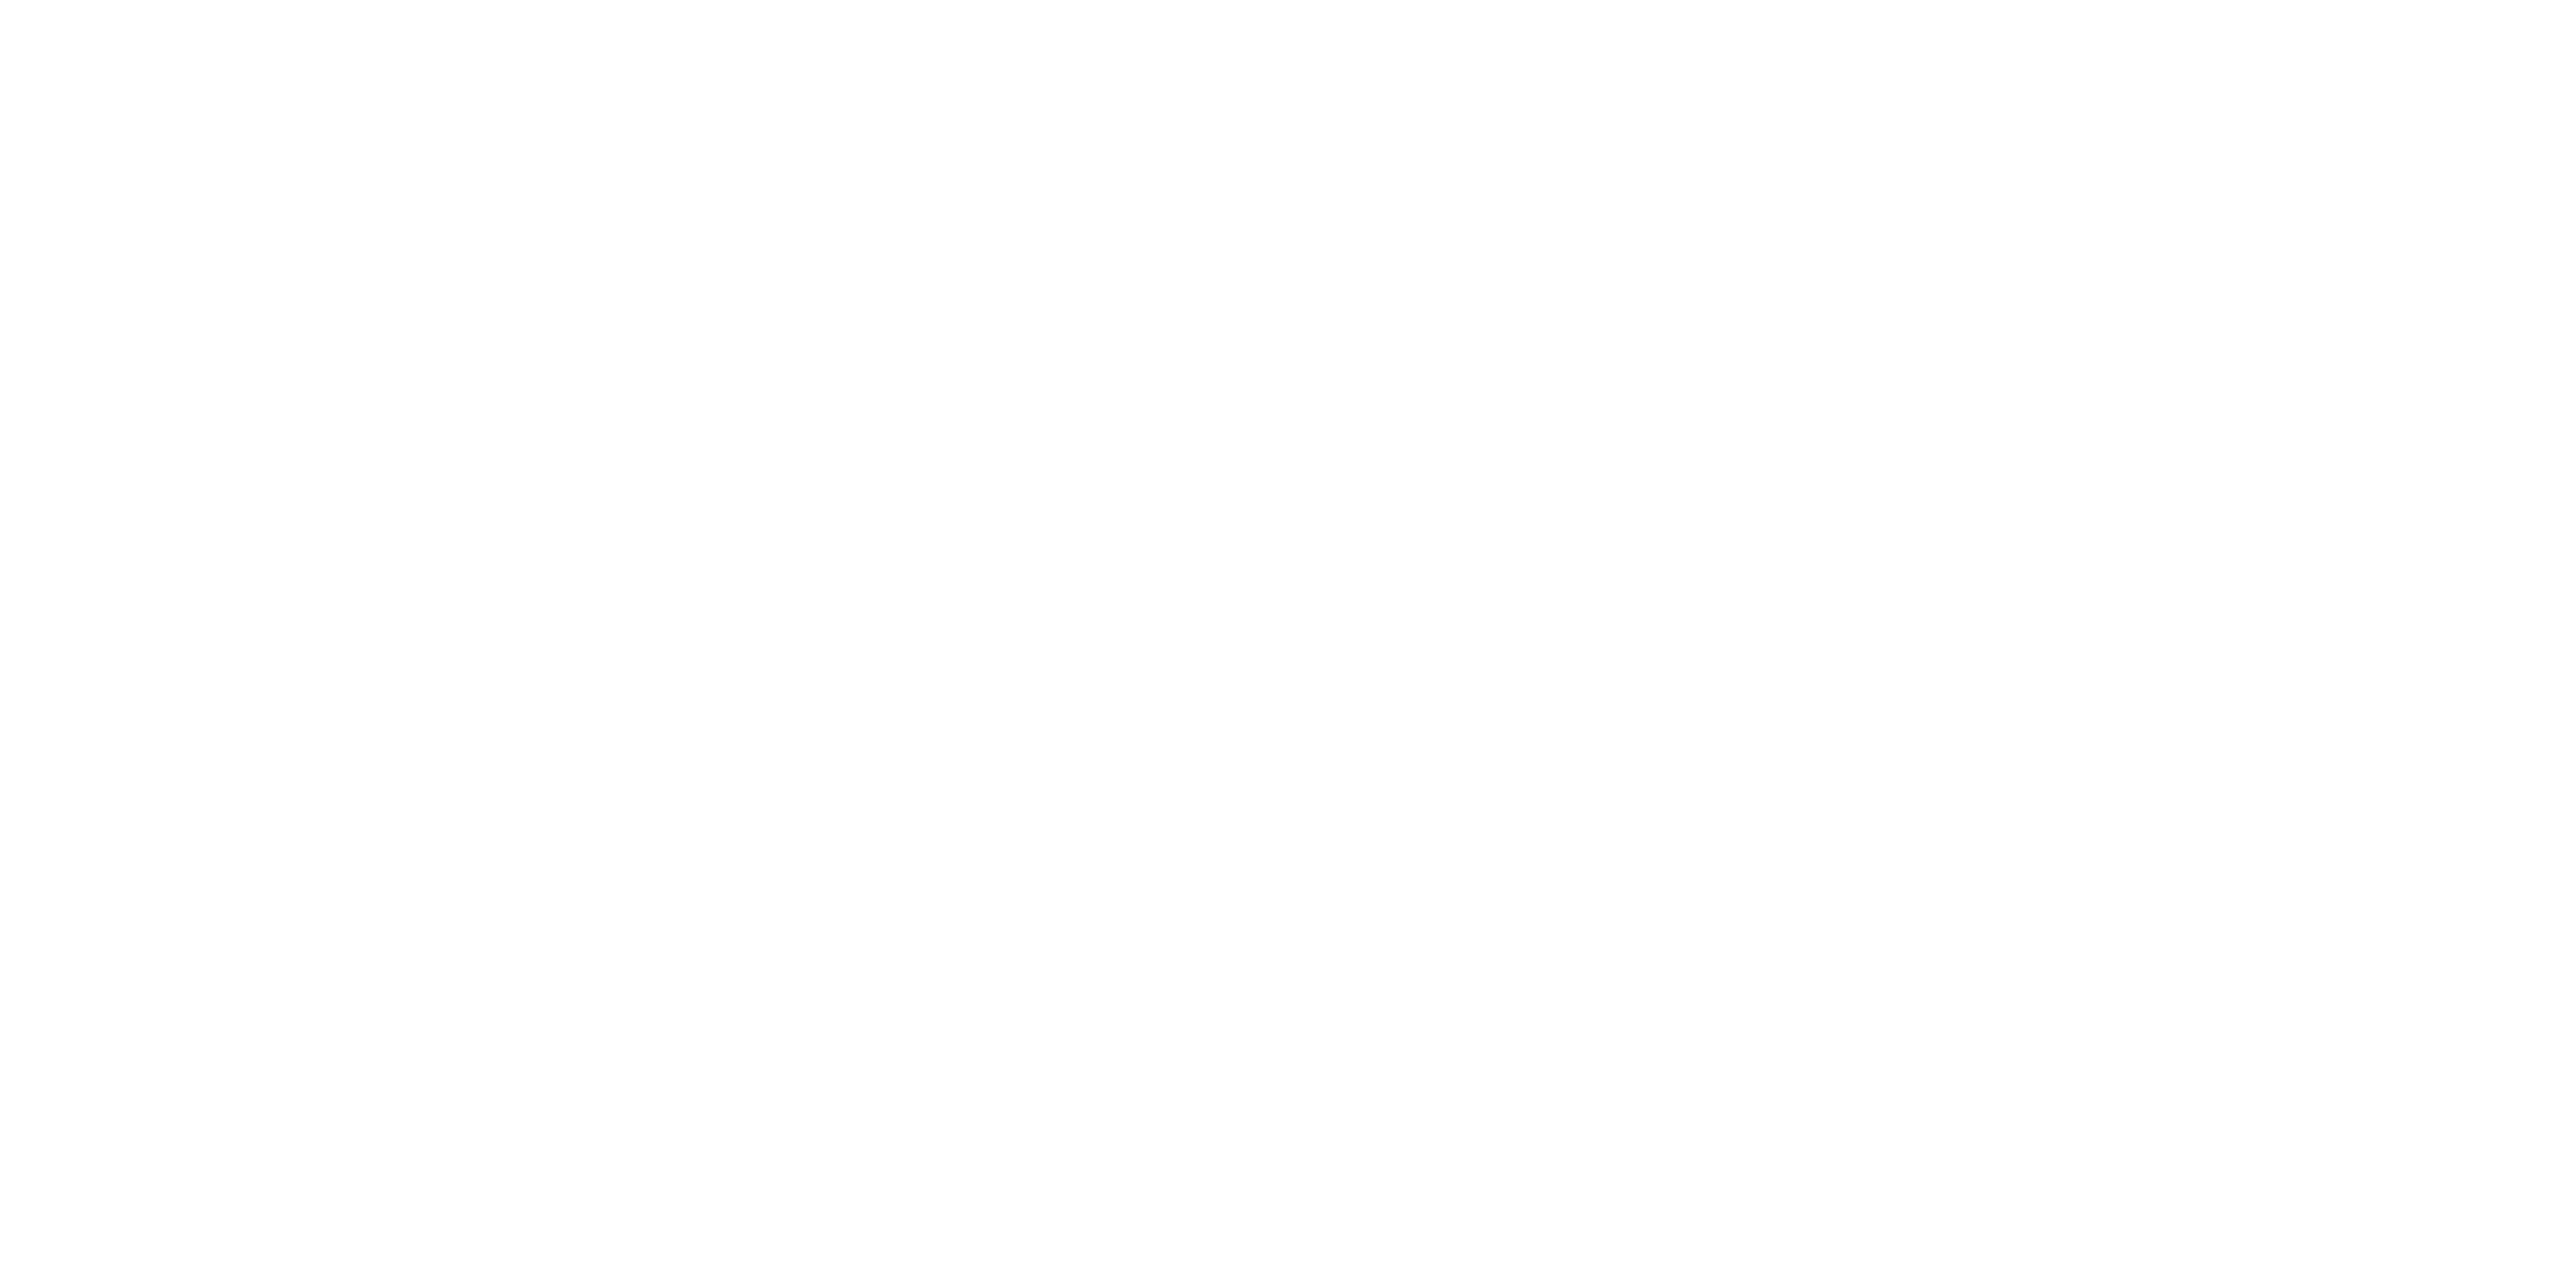 Total Select